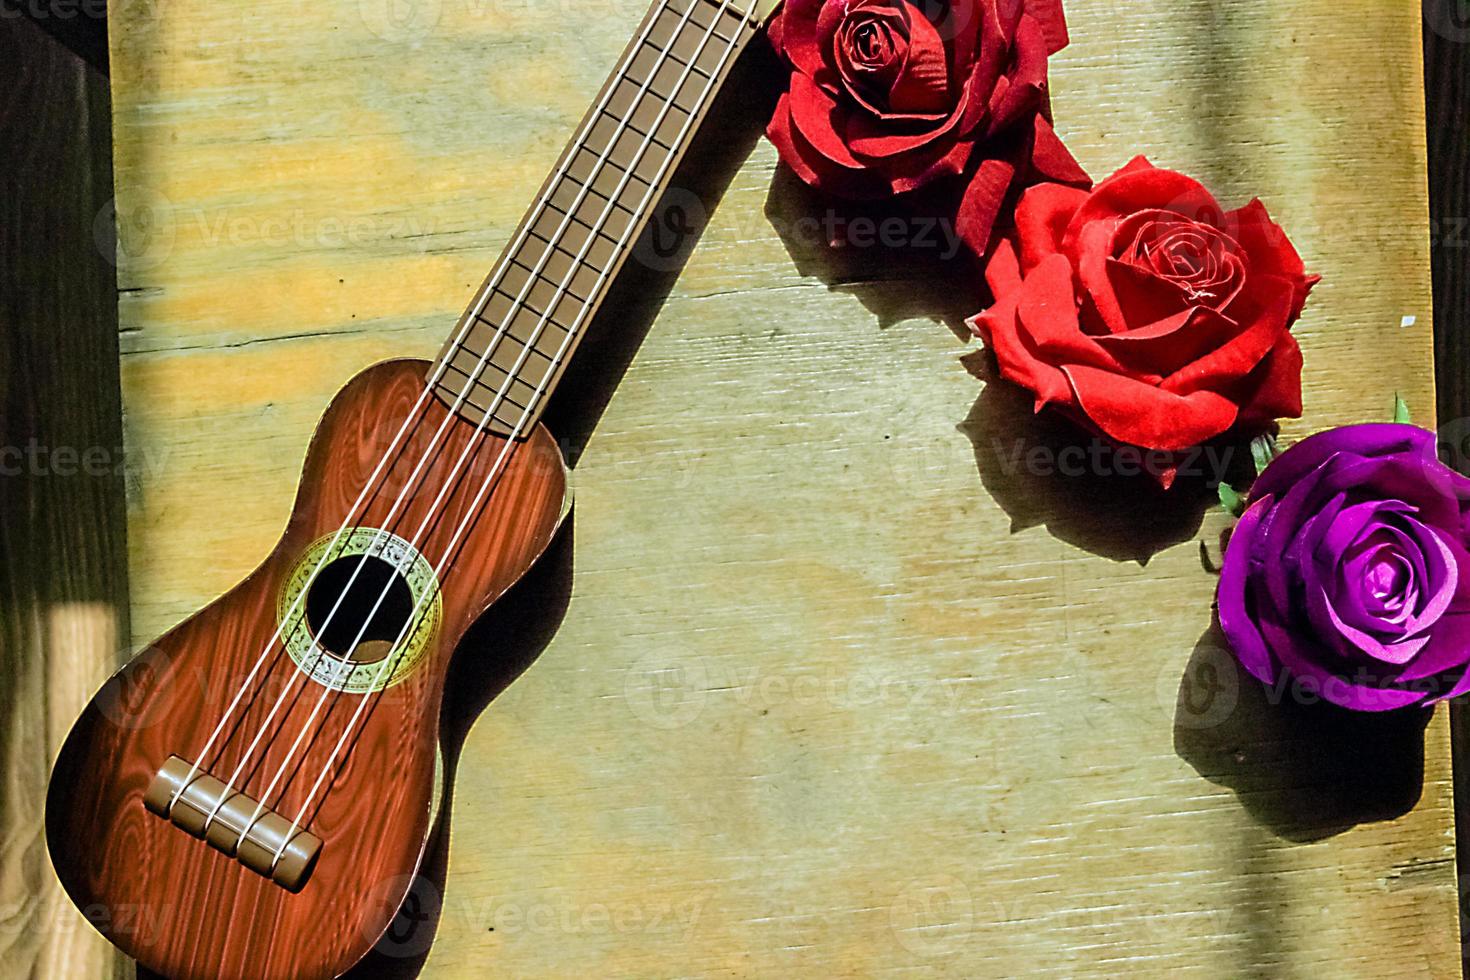 rosa roja en un cuello y diapasón de ukelele de guitarra púrpura. foto